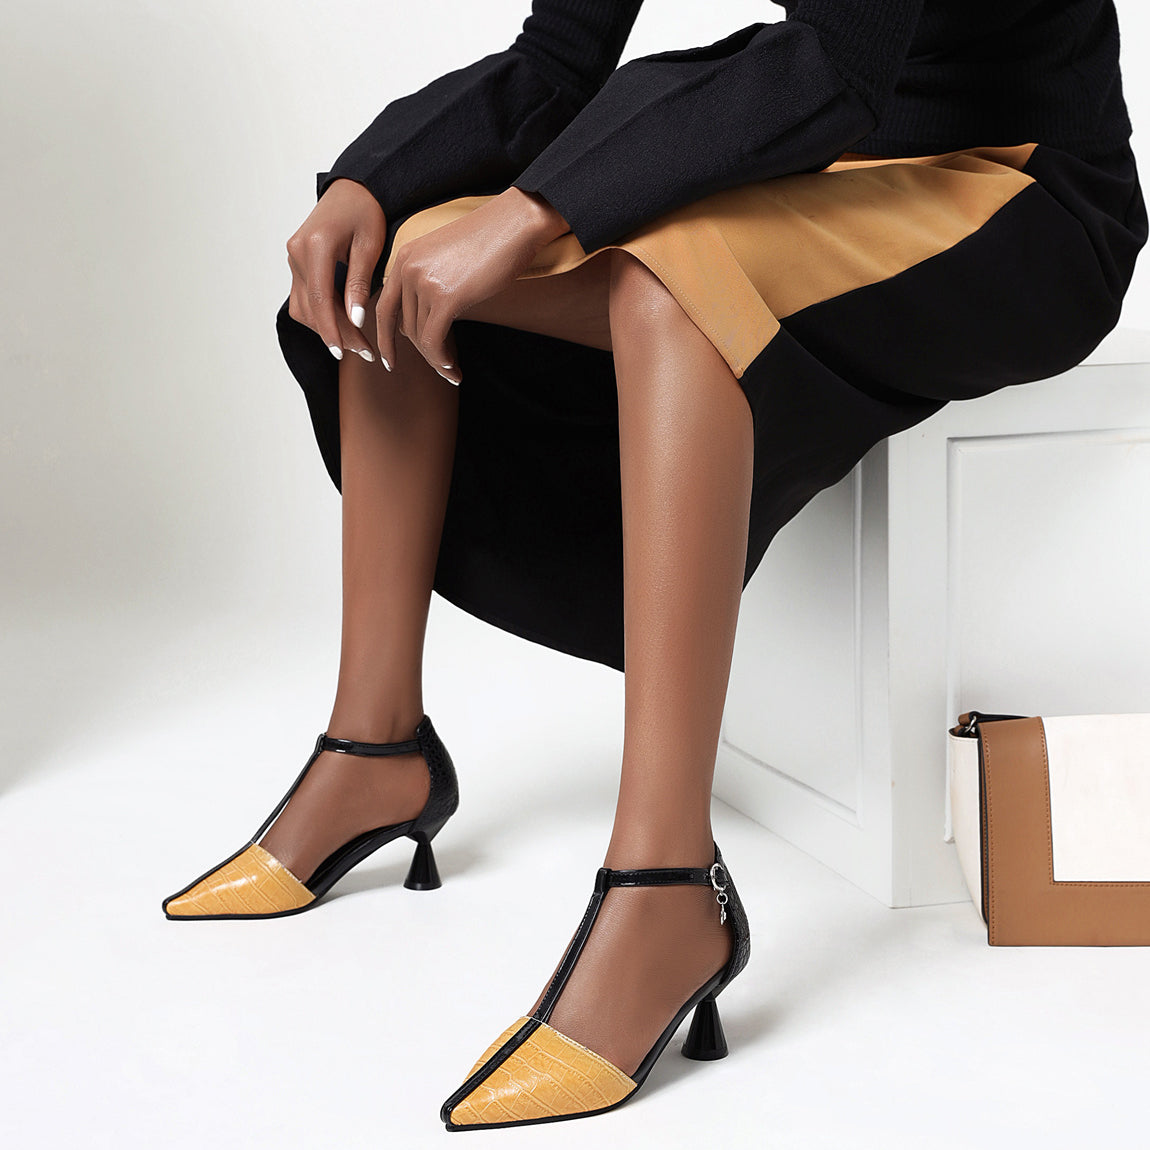 Bigsizeheels Trendy Chunky Heel Open Toe Line-Style Buckle Banquet Sandals - Yellow freeshipping - bigsizeheel®-size5-size15 -All Plus Sizes Available!